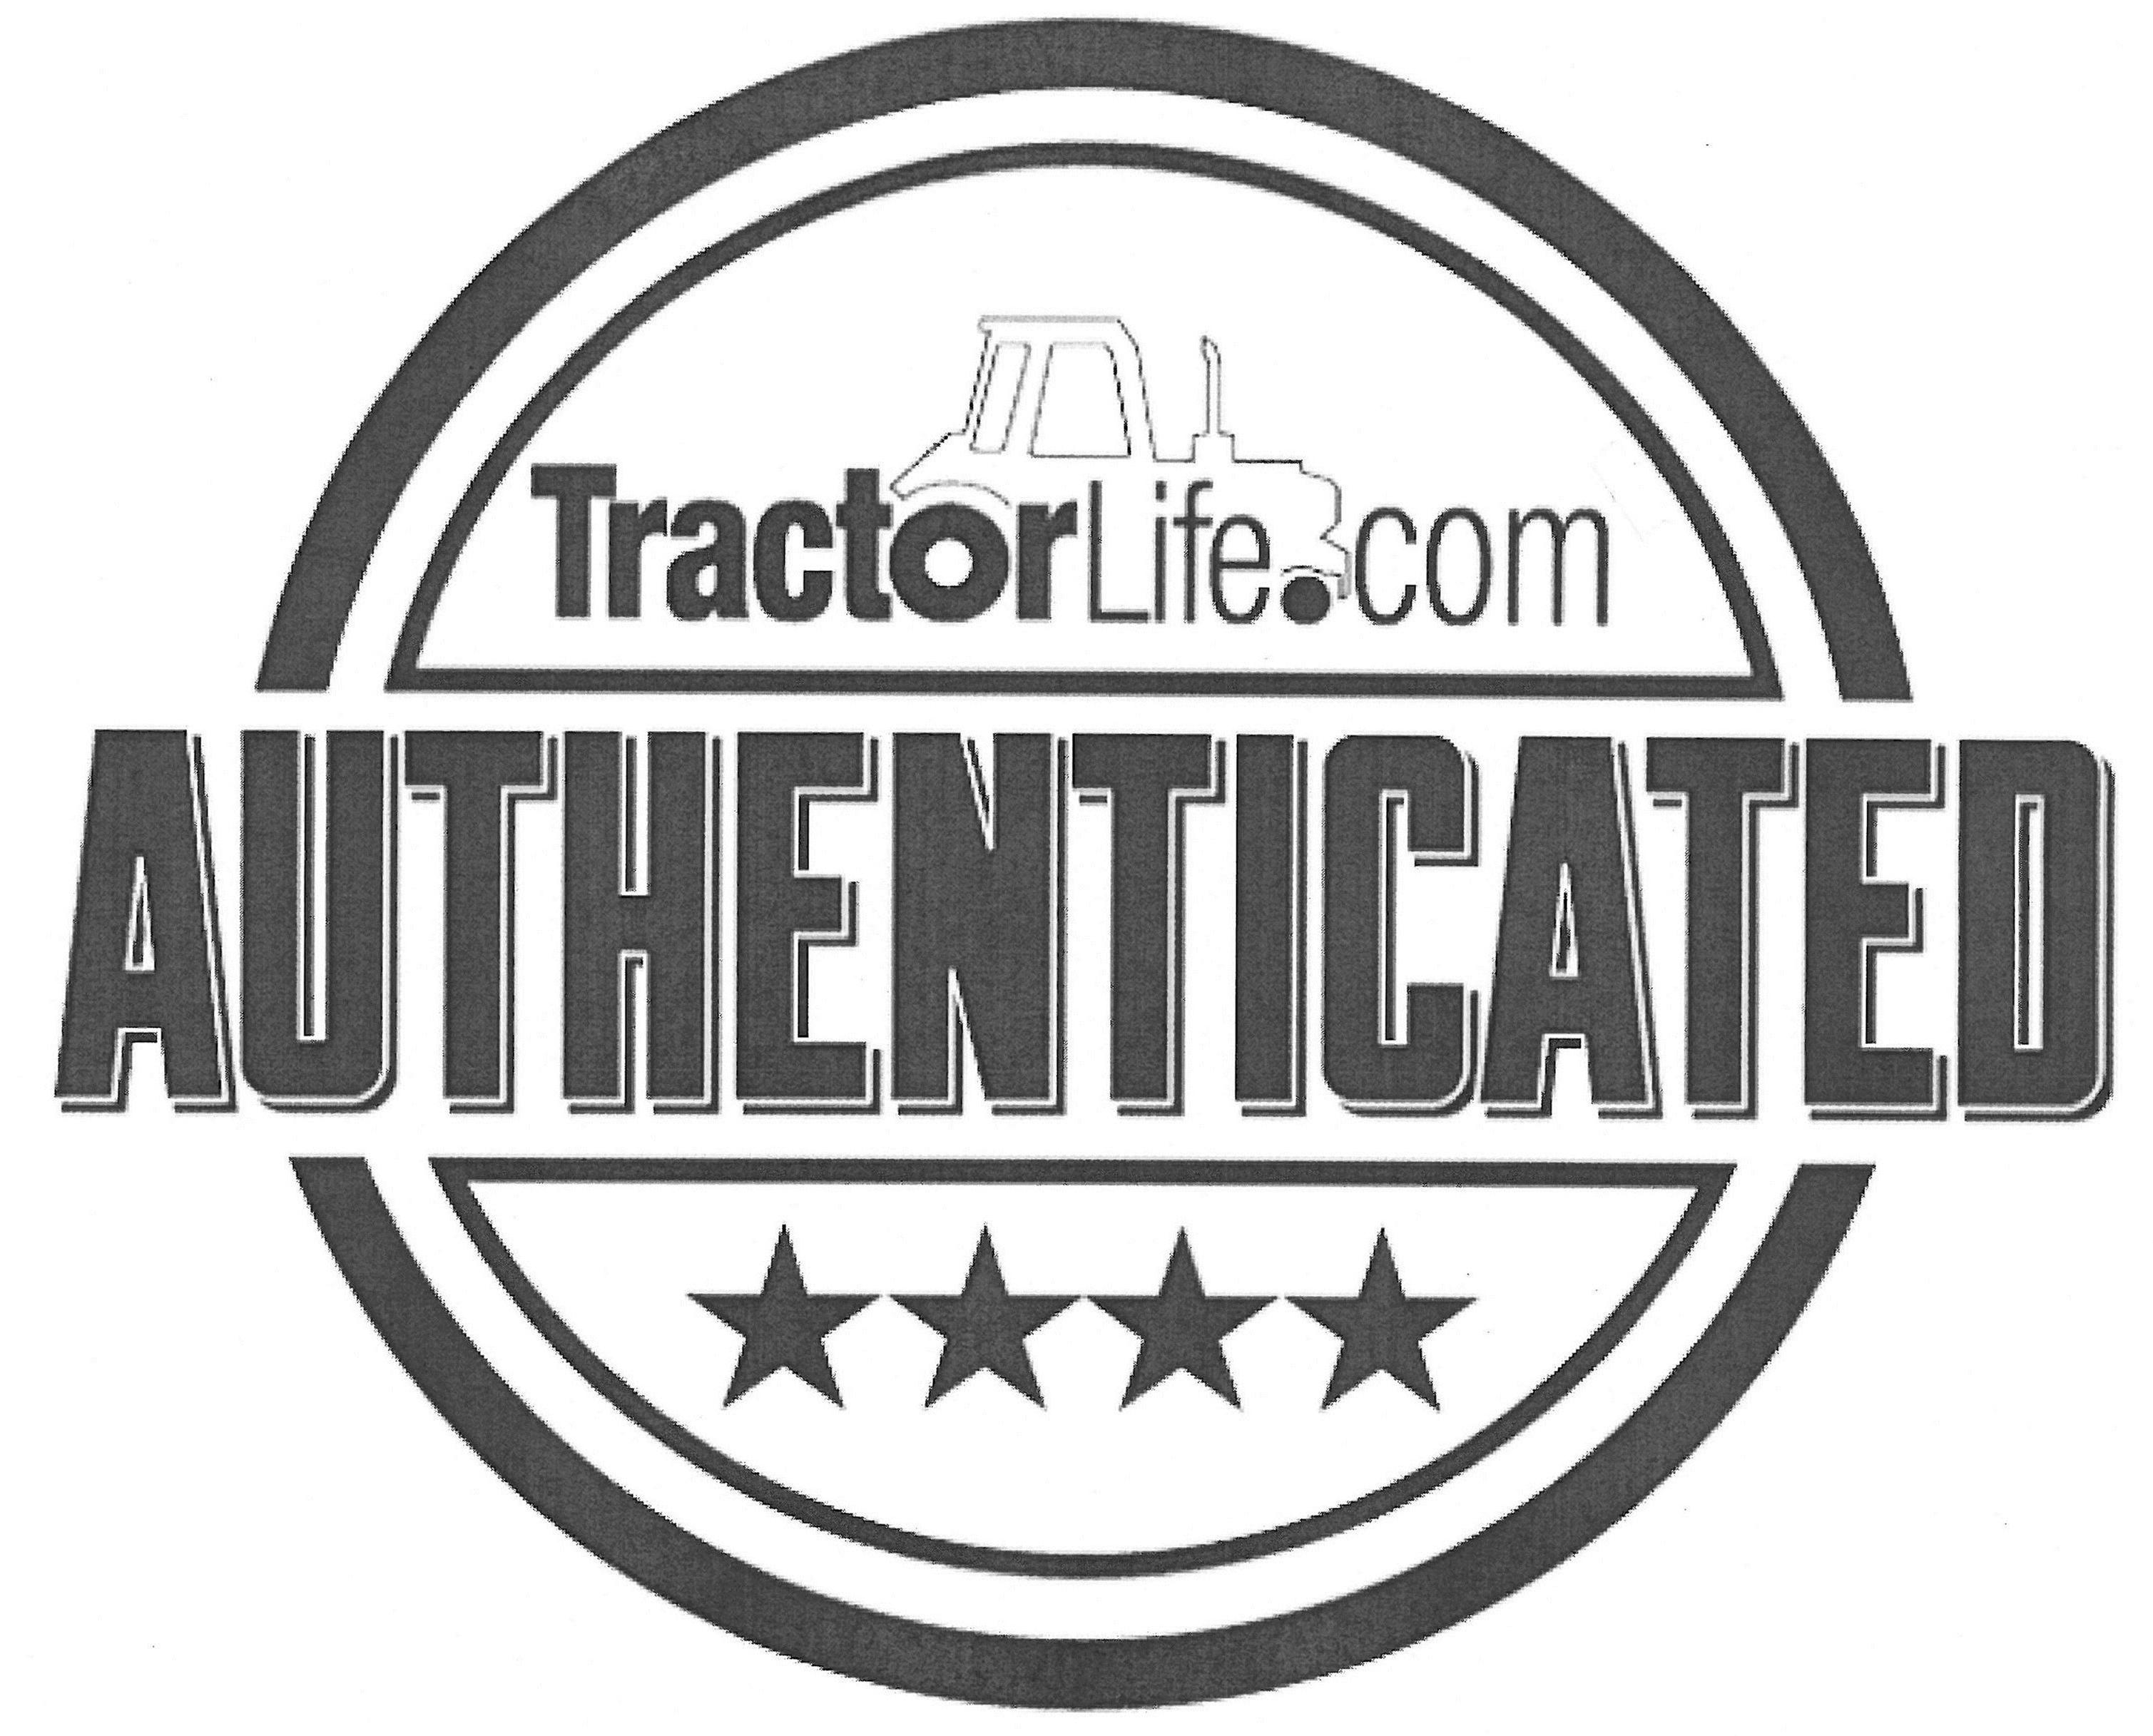  TRACTORLIFE.COM AUTHENTICATED